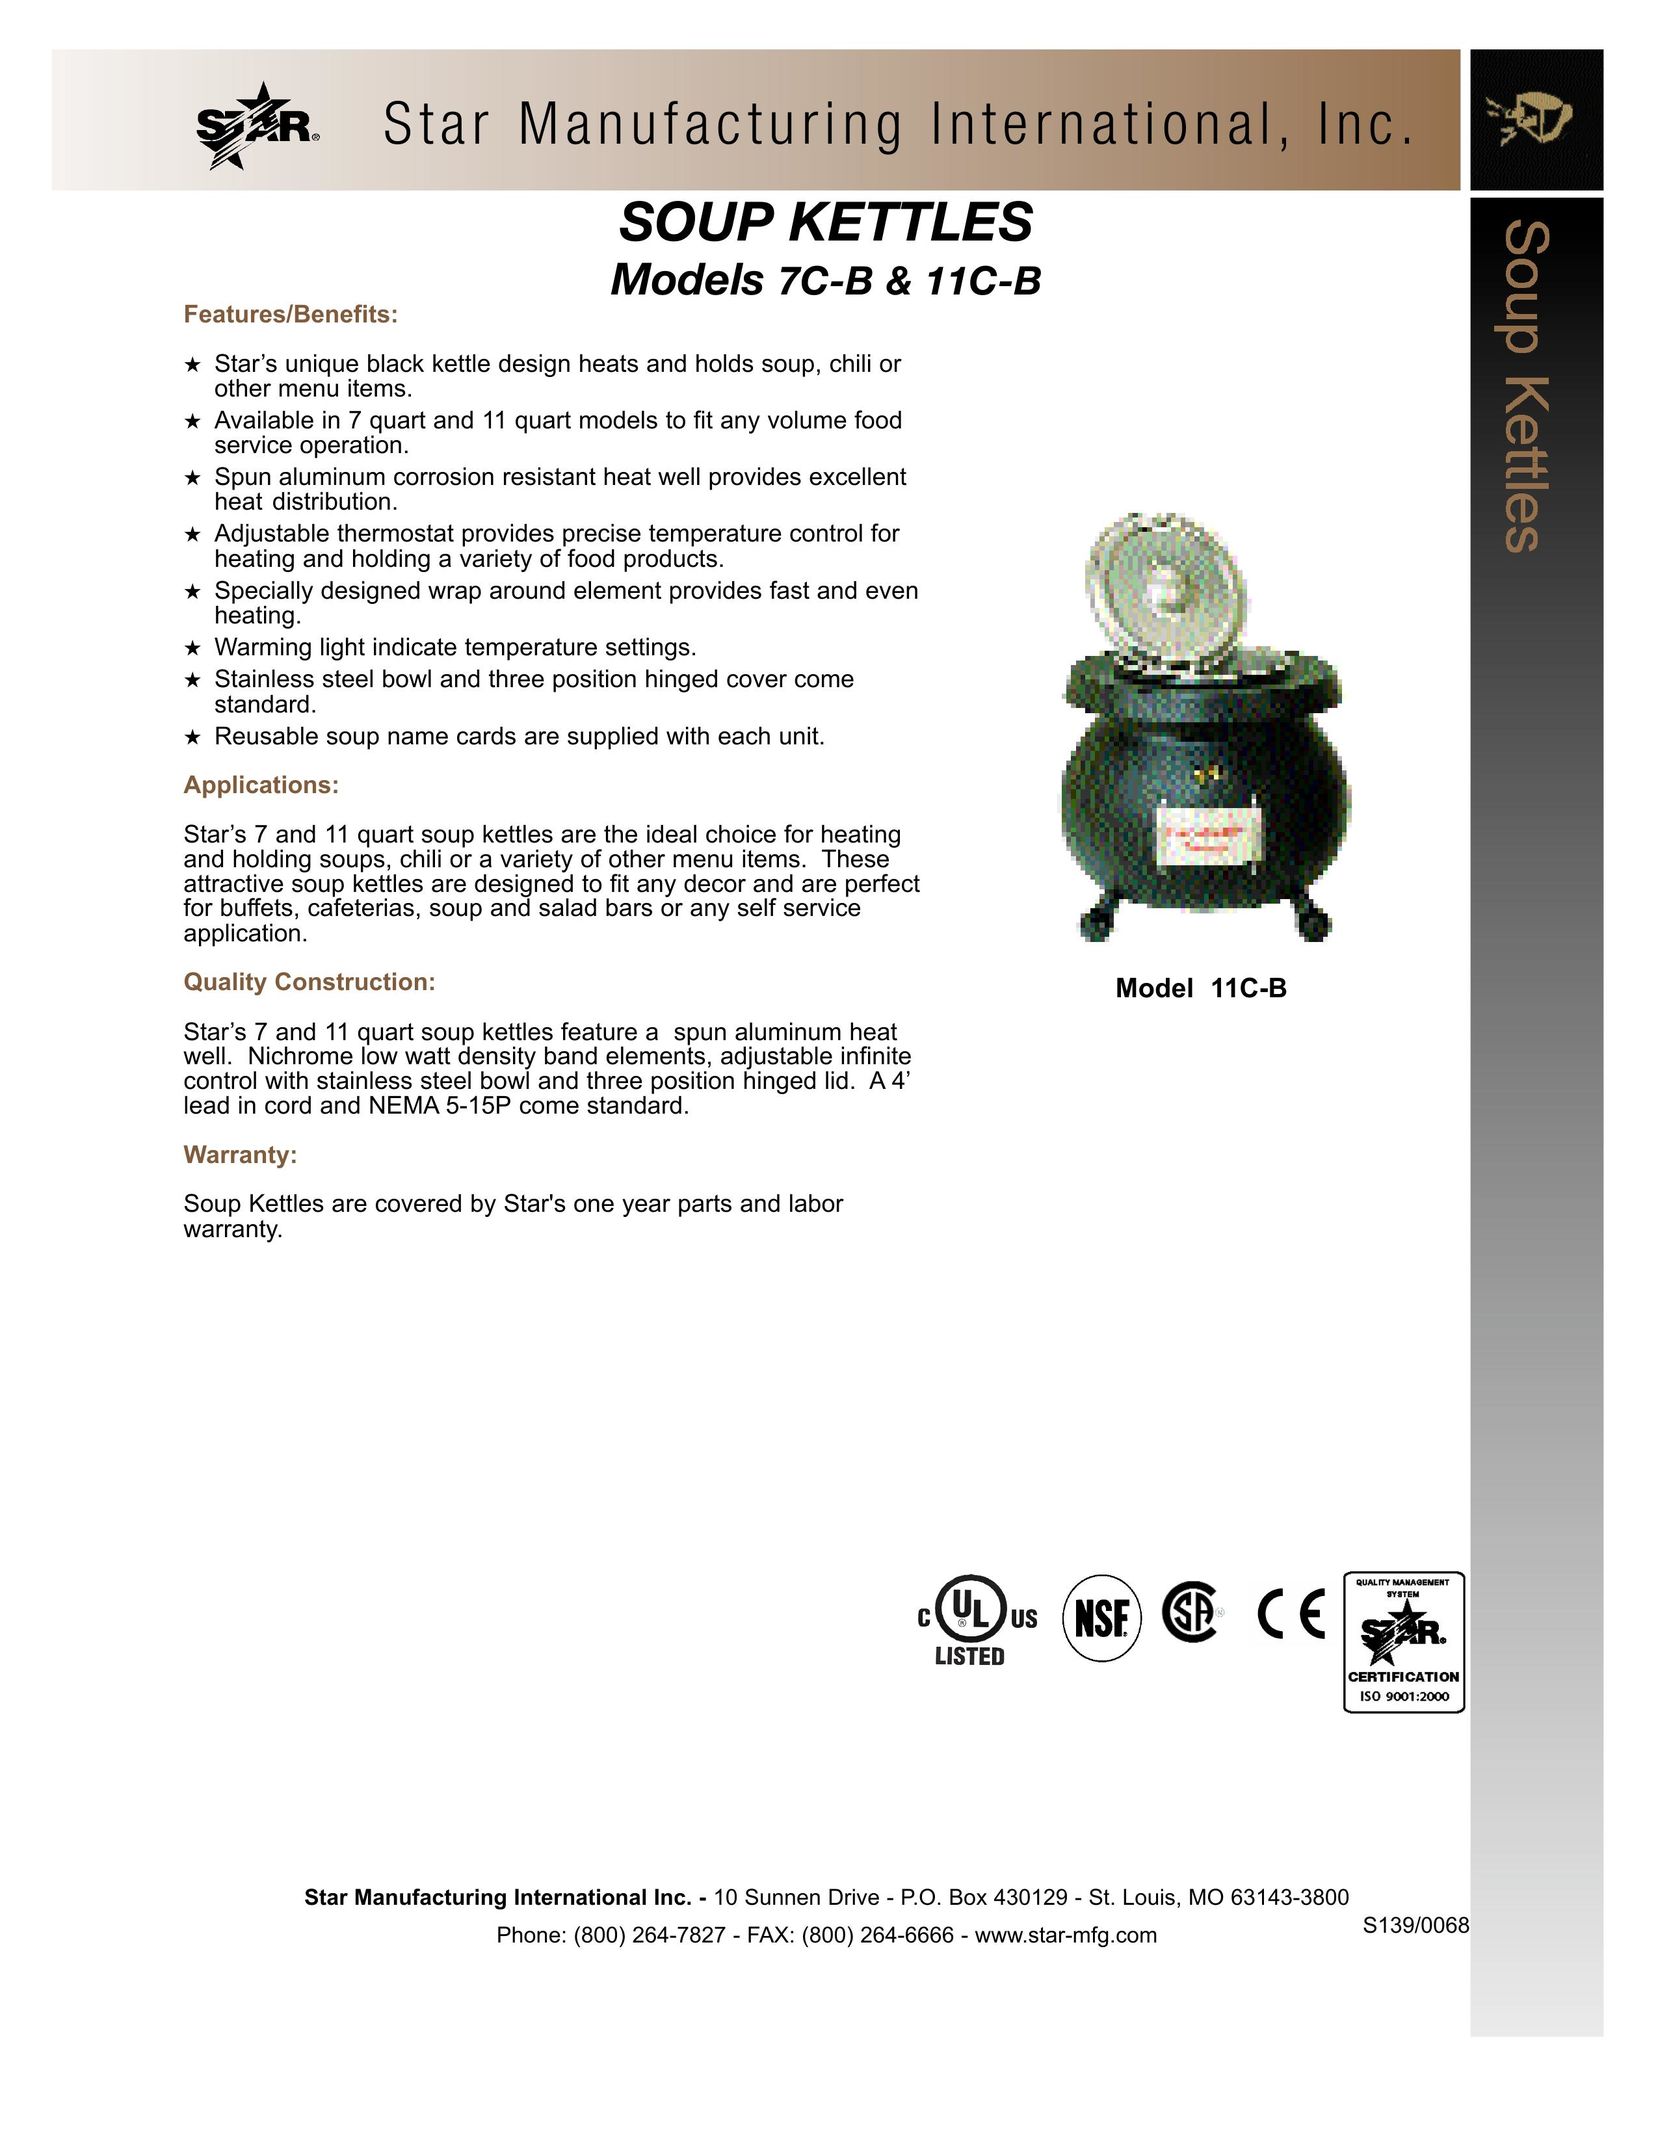 Star Manufacturing 7C-B Hot Beverage Maker User Manual